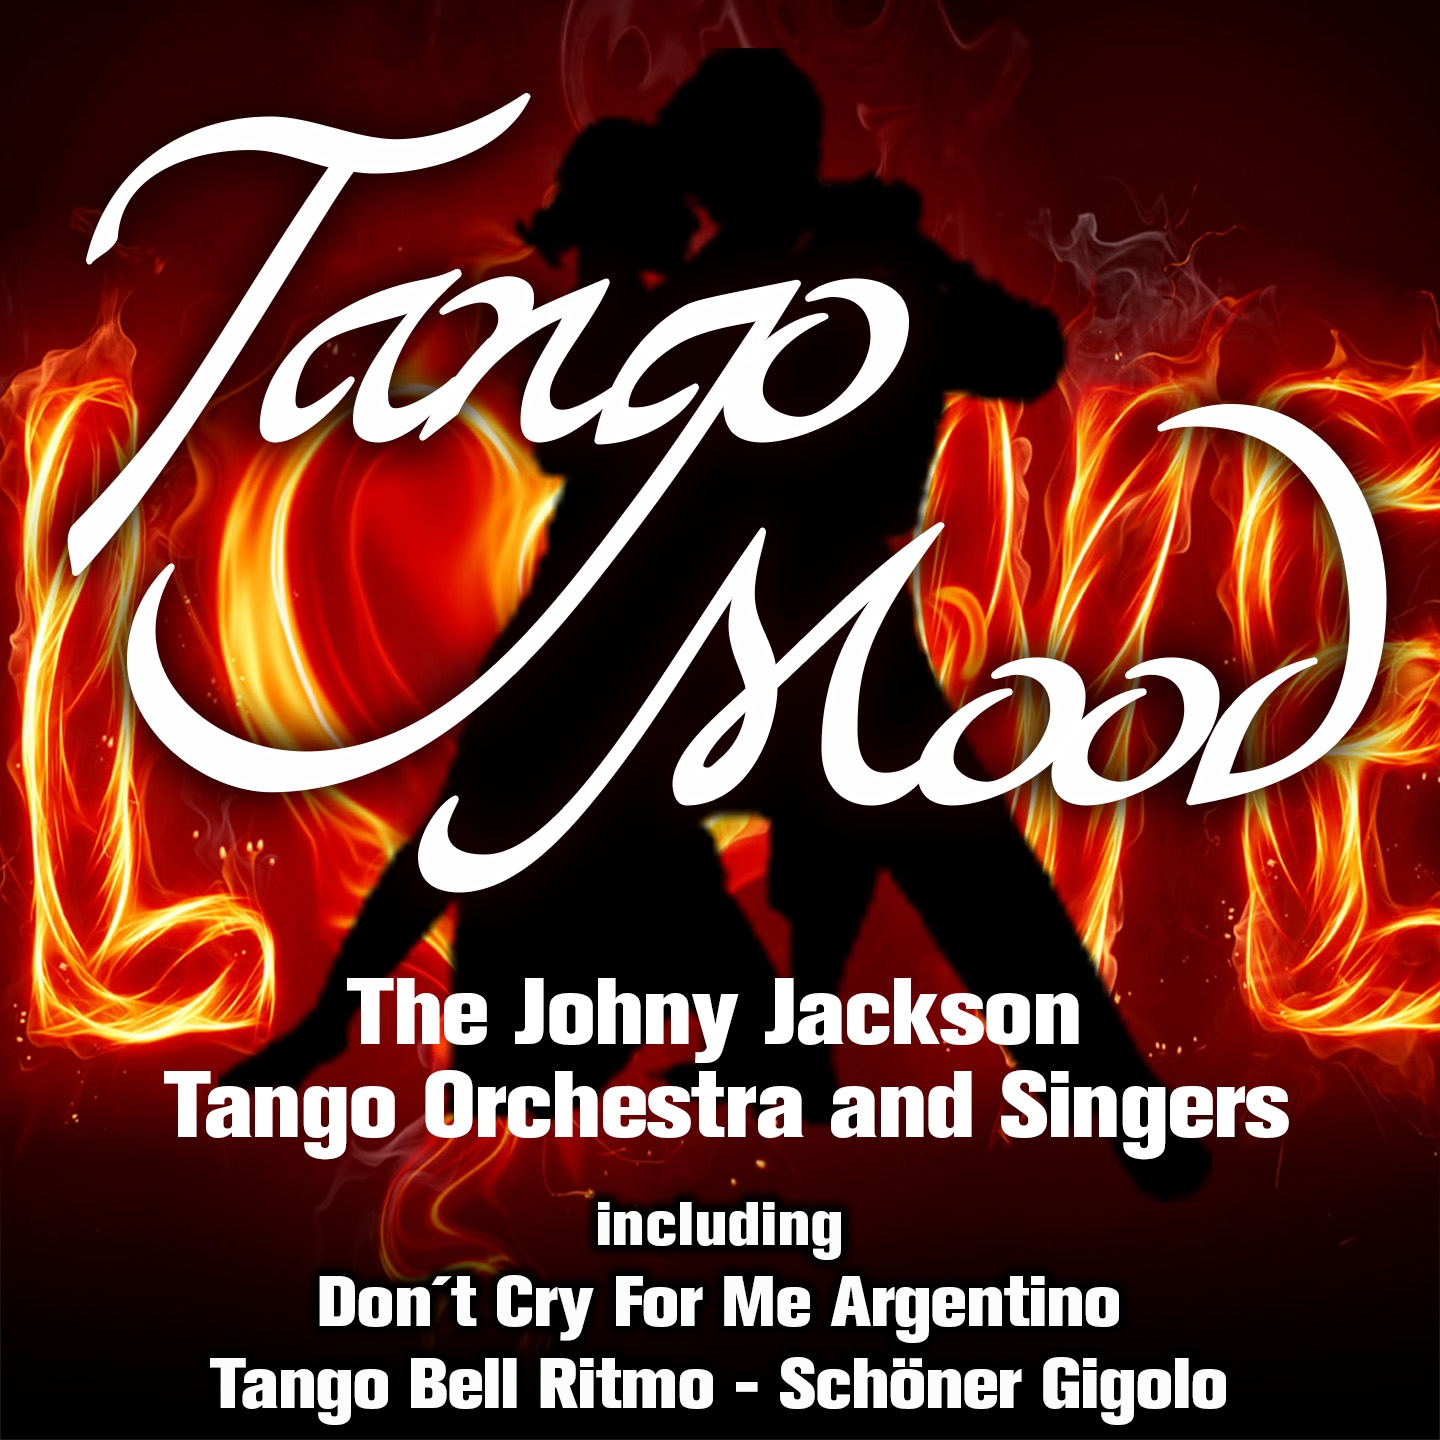 Tango bell ritmo